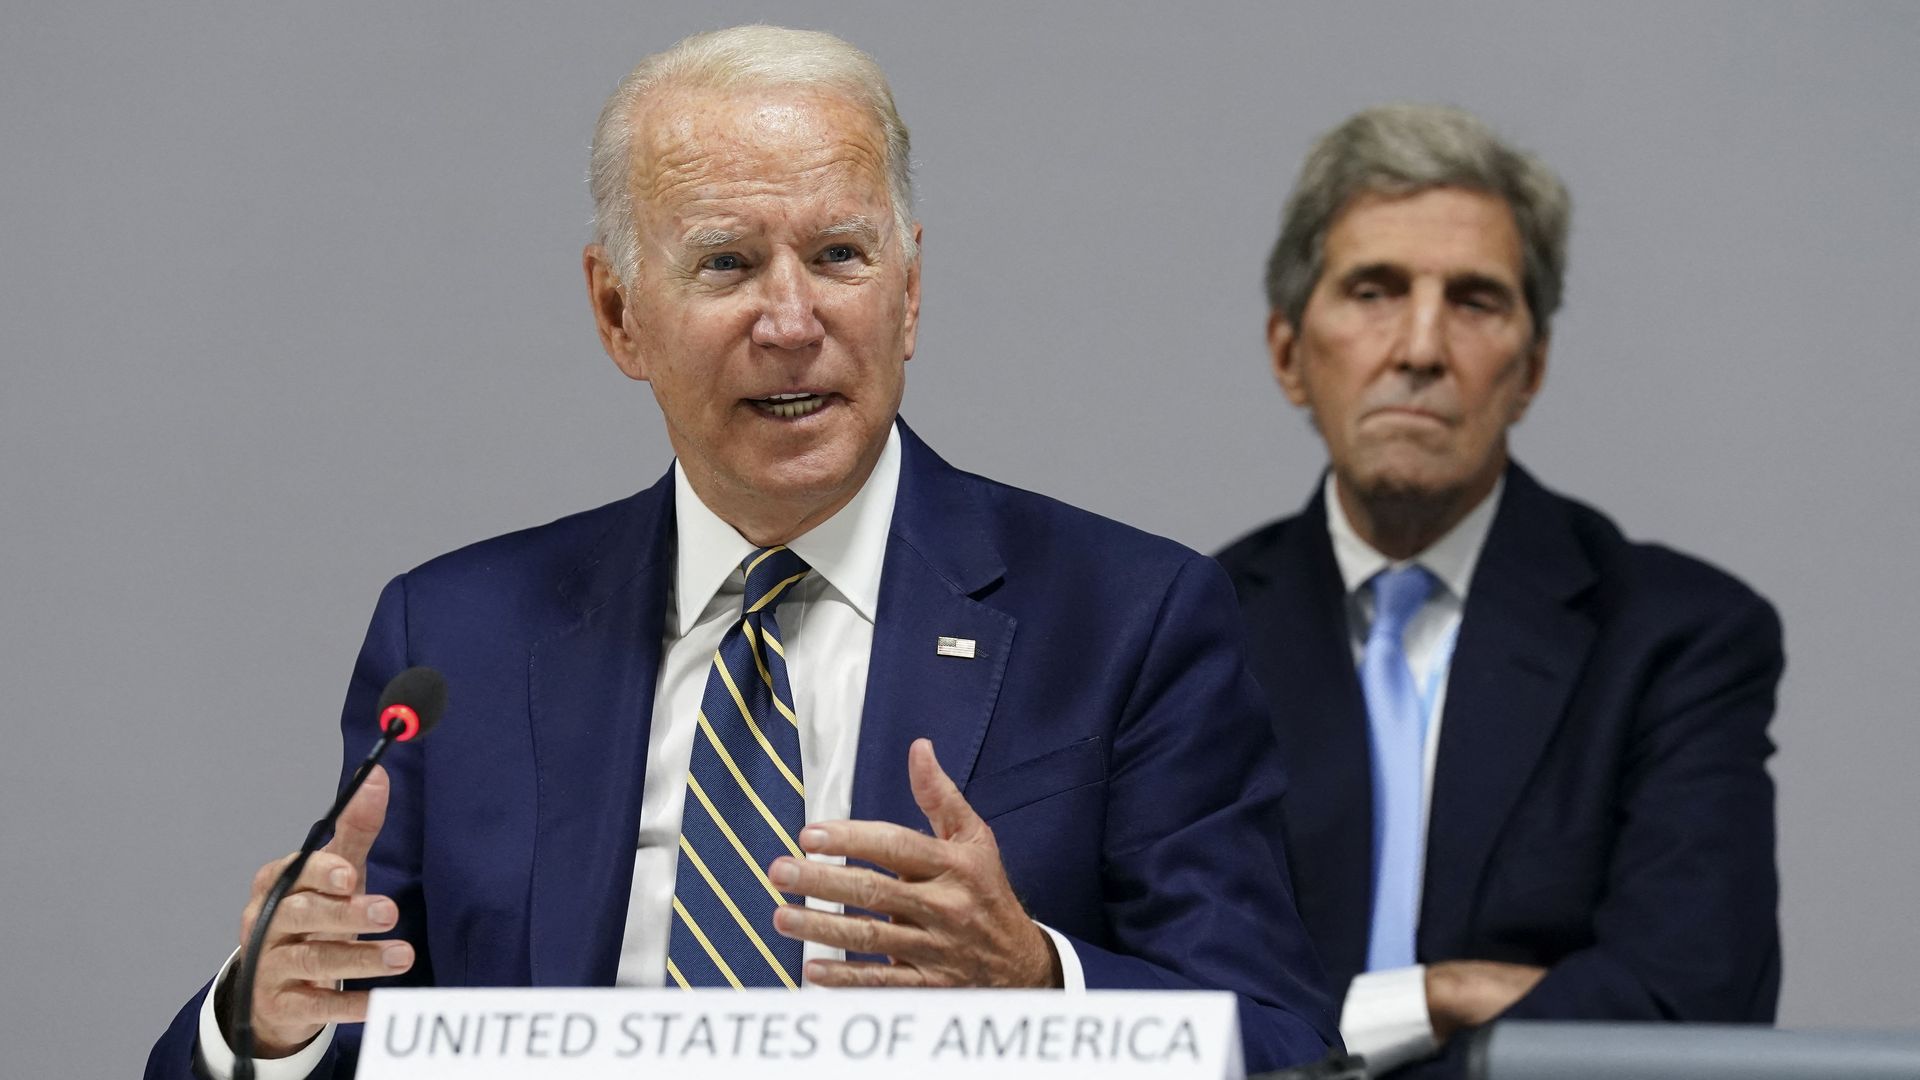 President Biden speaks at a meeting during COP26 in Glasgow, Scotland, on Nov. 1, 2021.